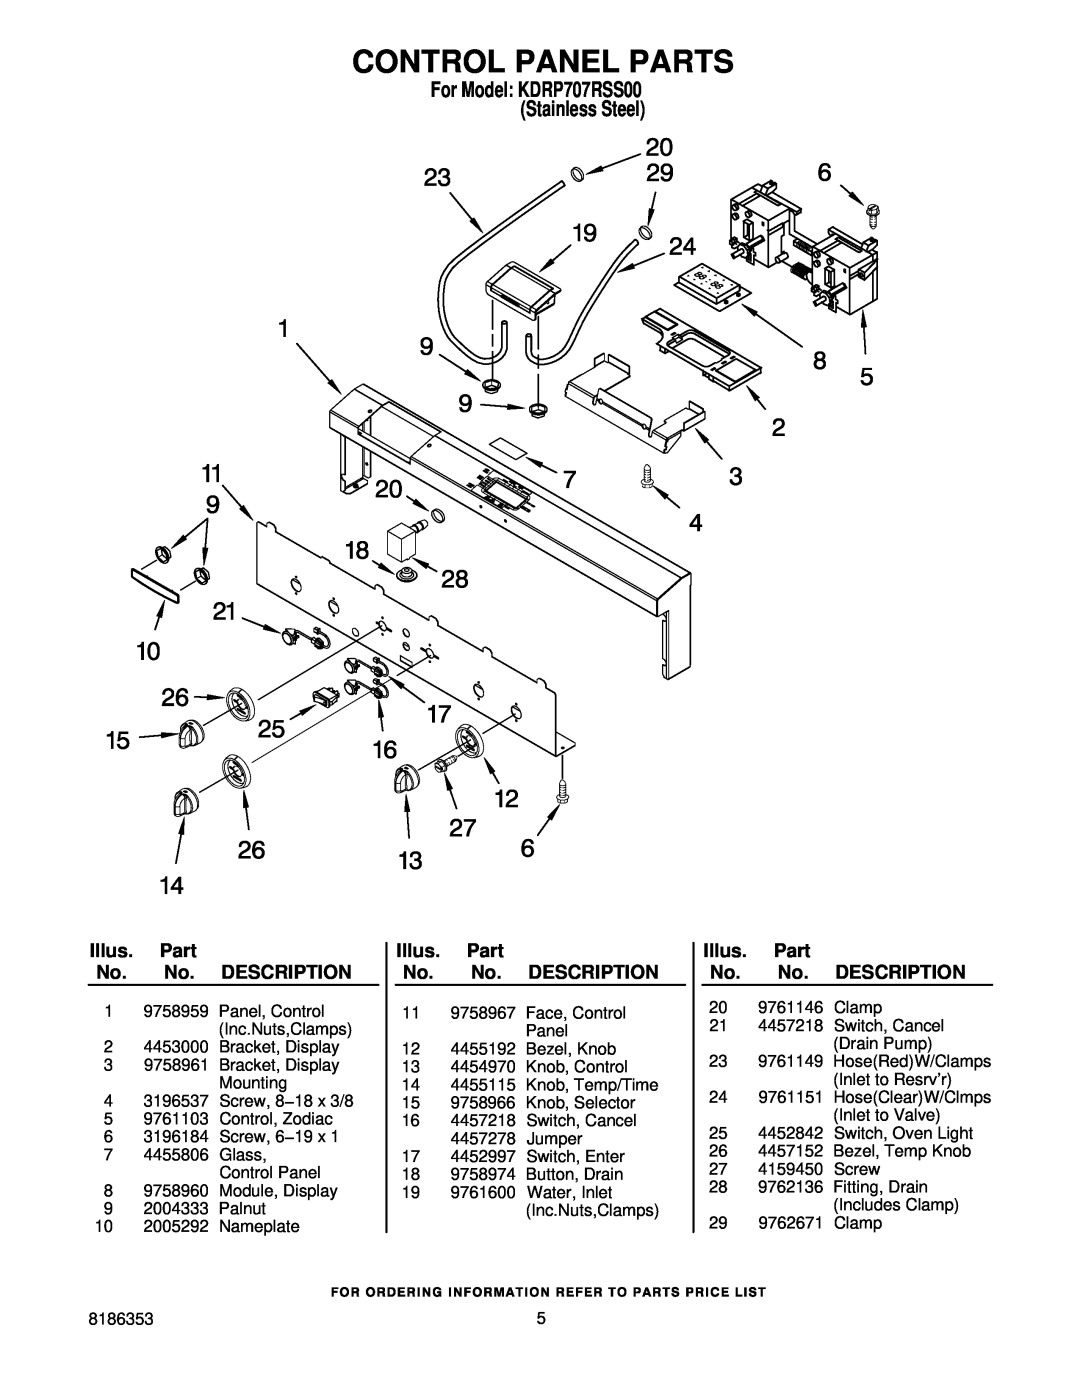 KitchenAid manual Control Panel Parts, For Model KDRP707RSS00 Stainless Steel, Illus. Part No. No. DESCRIPTION 